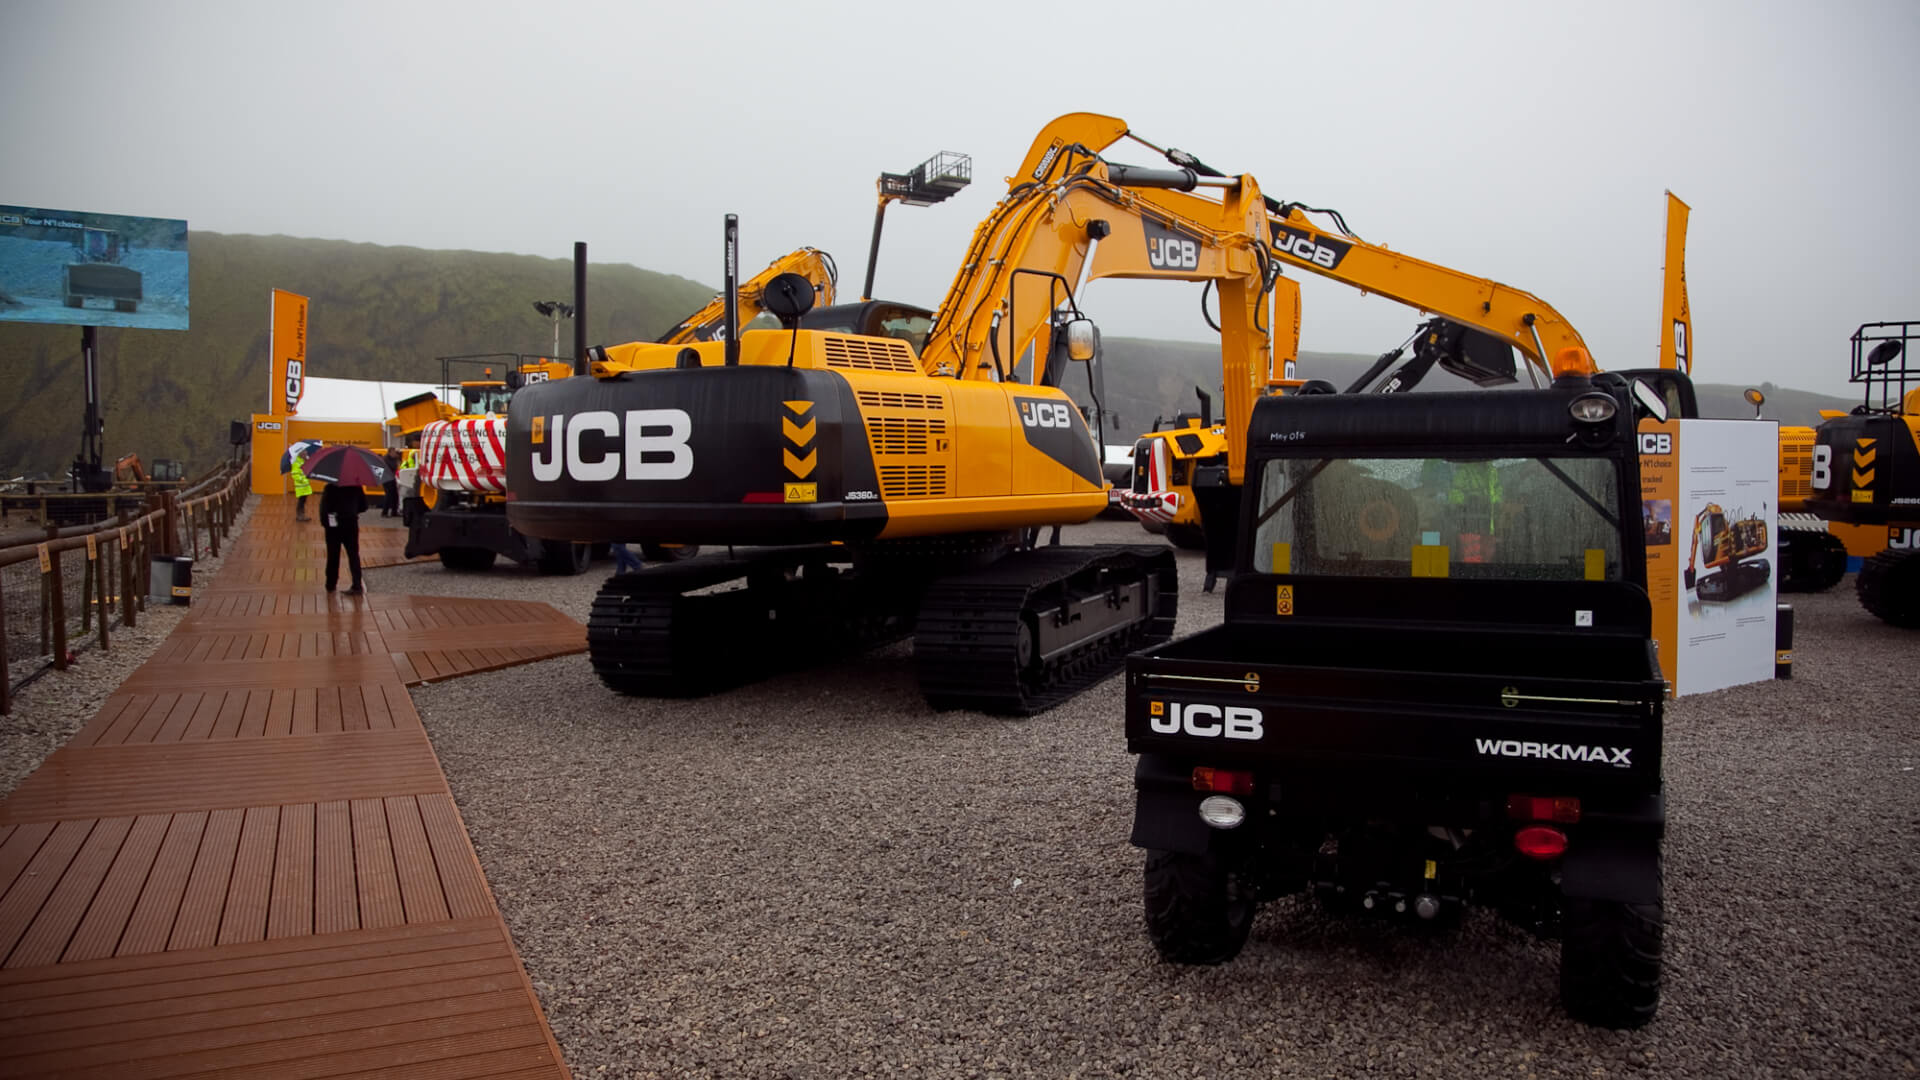 jcb machinery on display outside